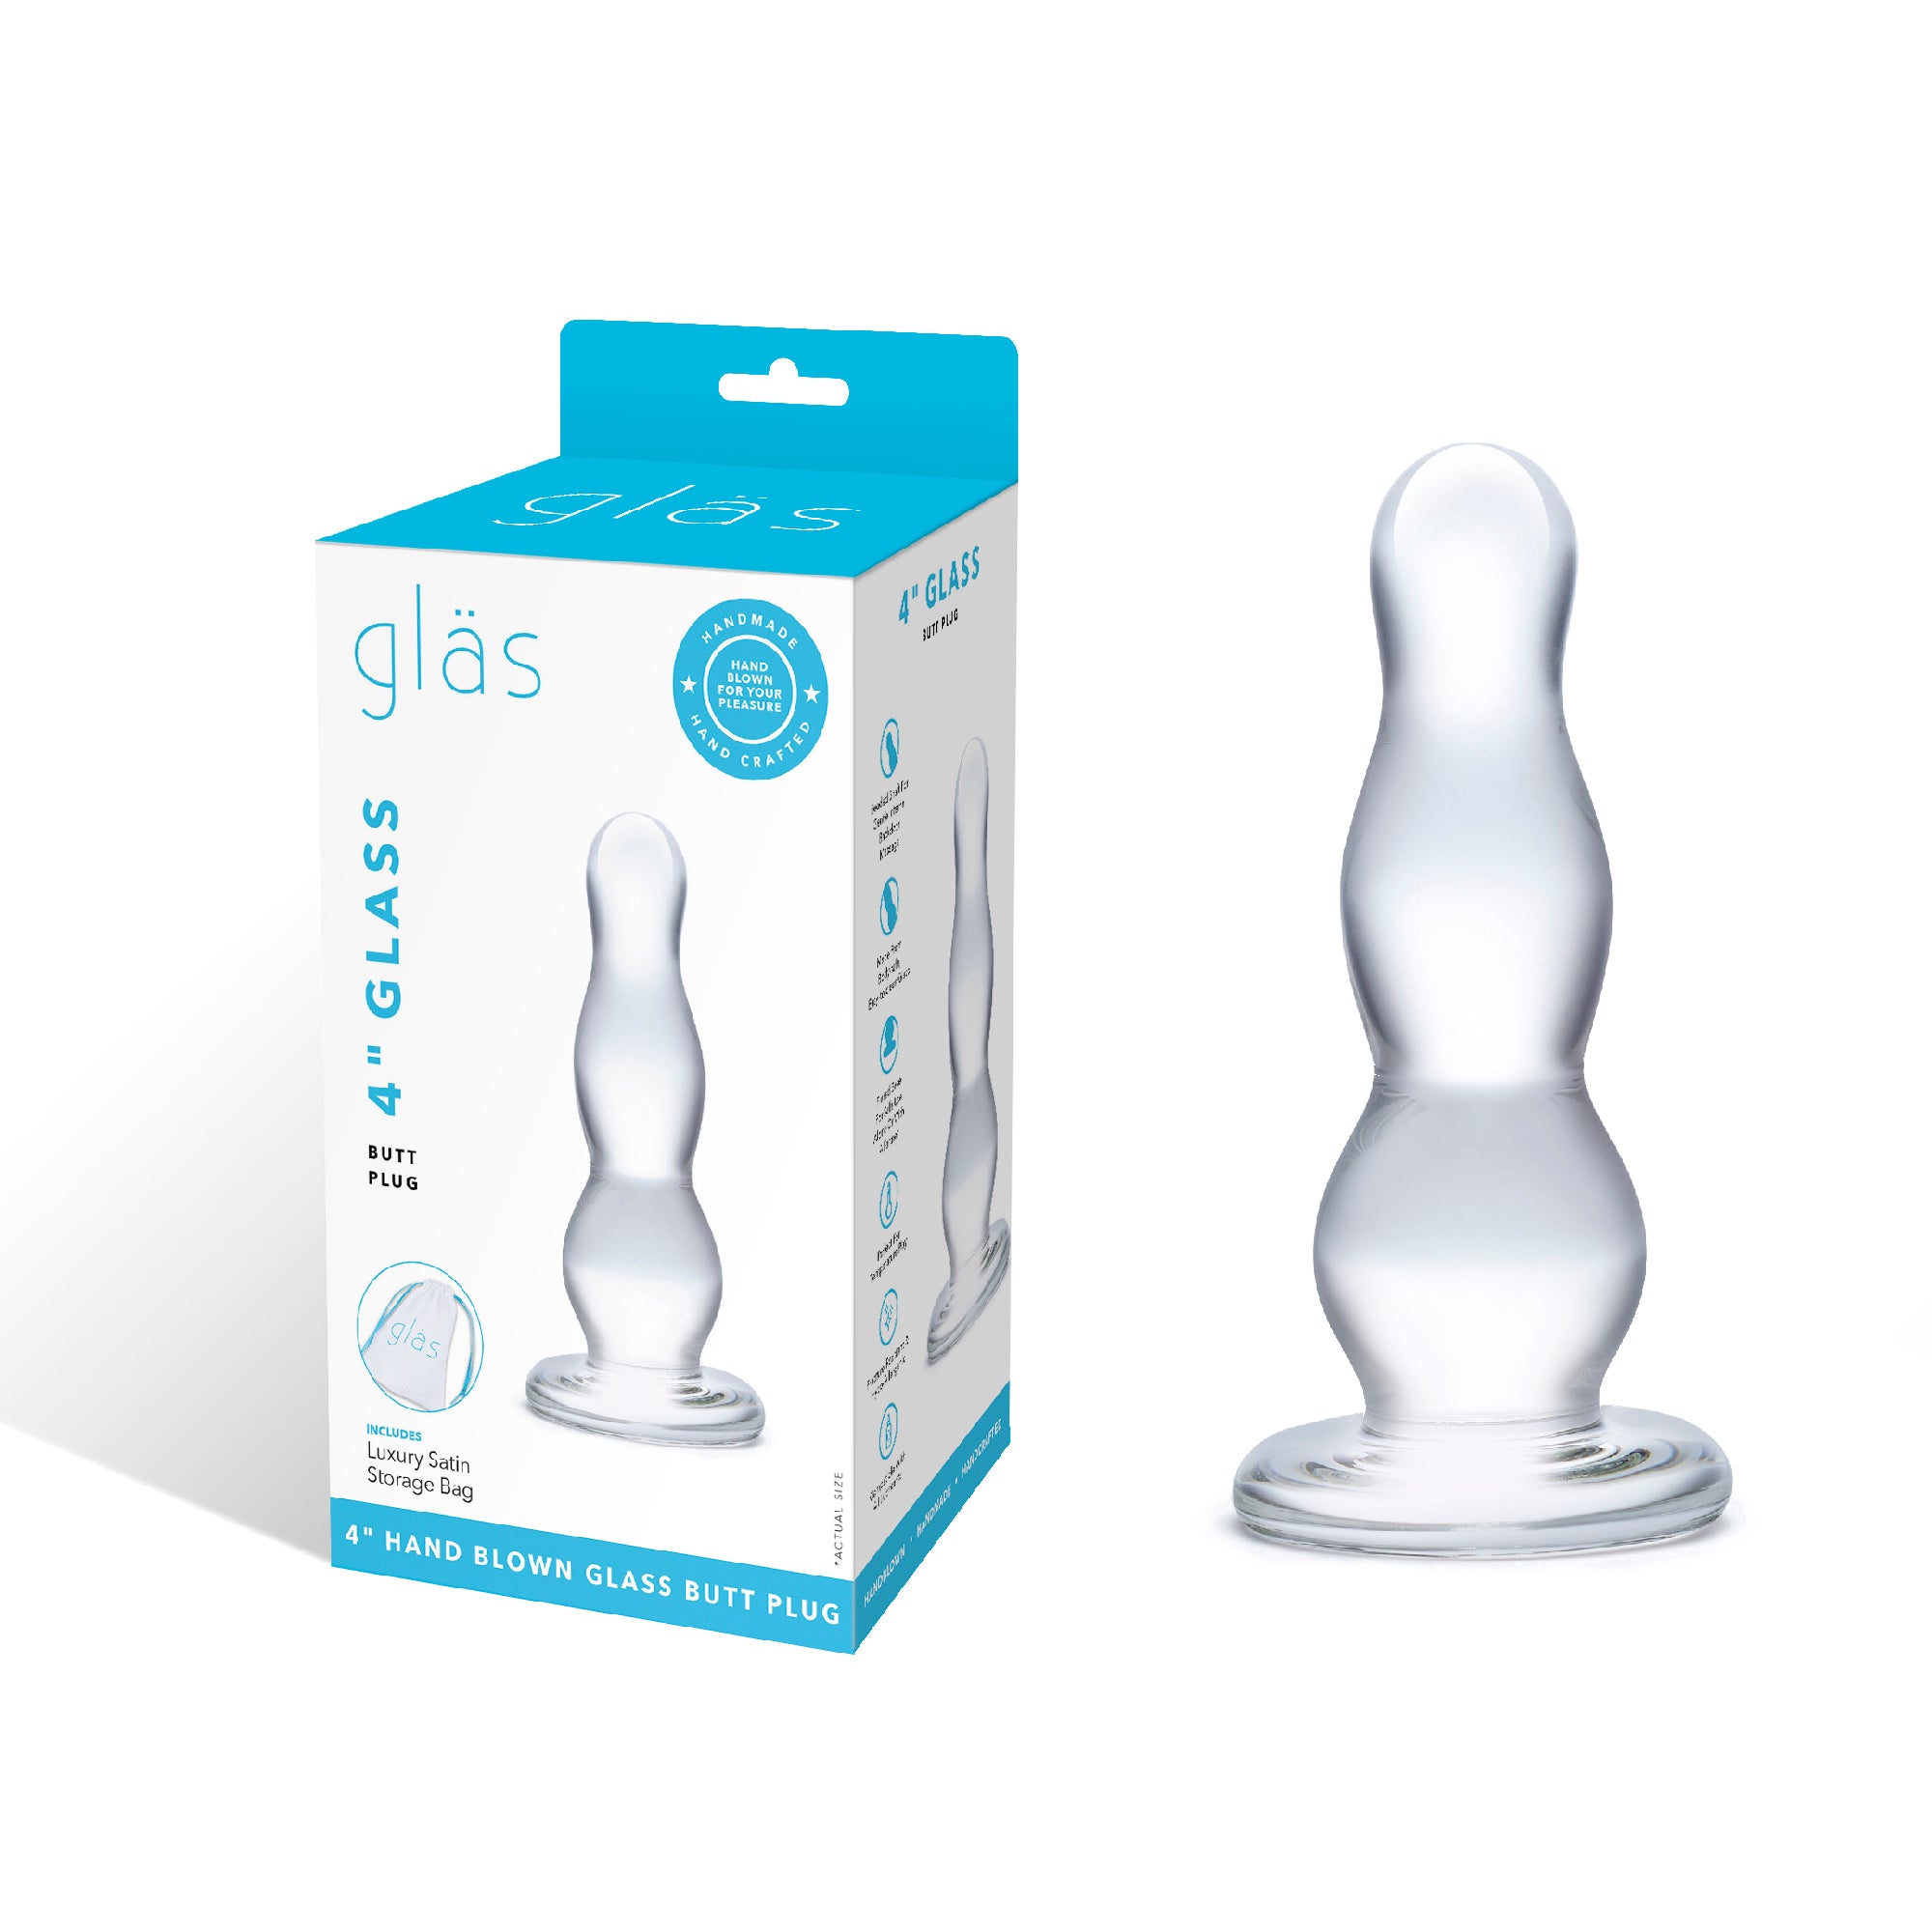 Packaging of the Gläs 4 inch Glass Butt Plug